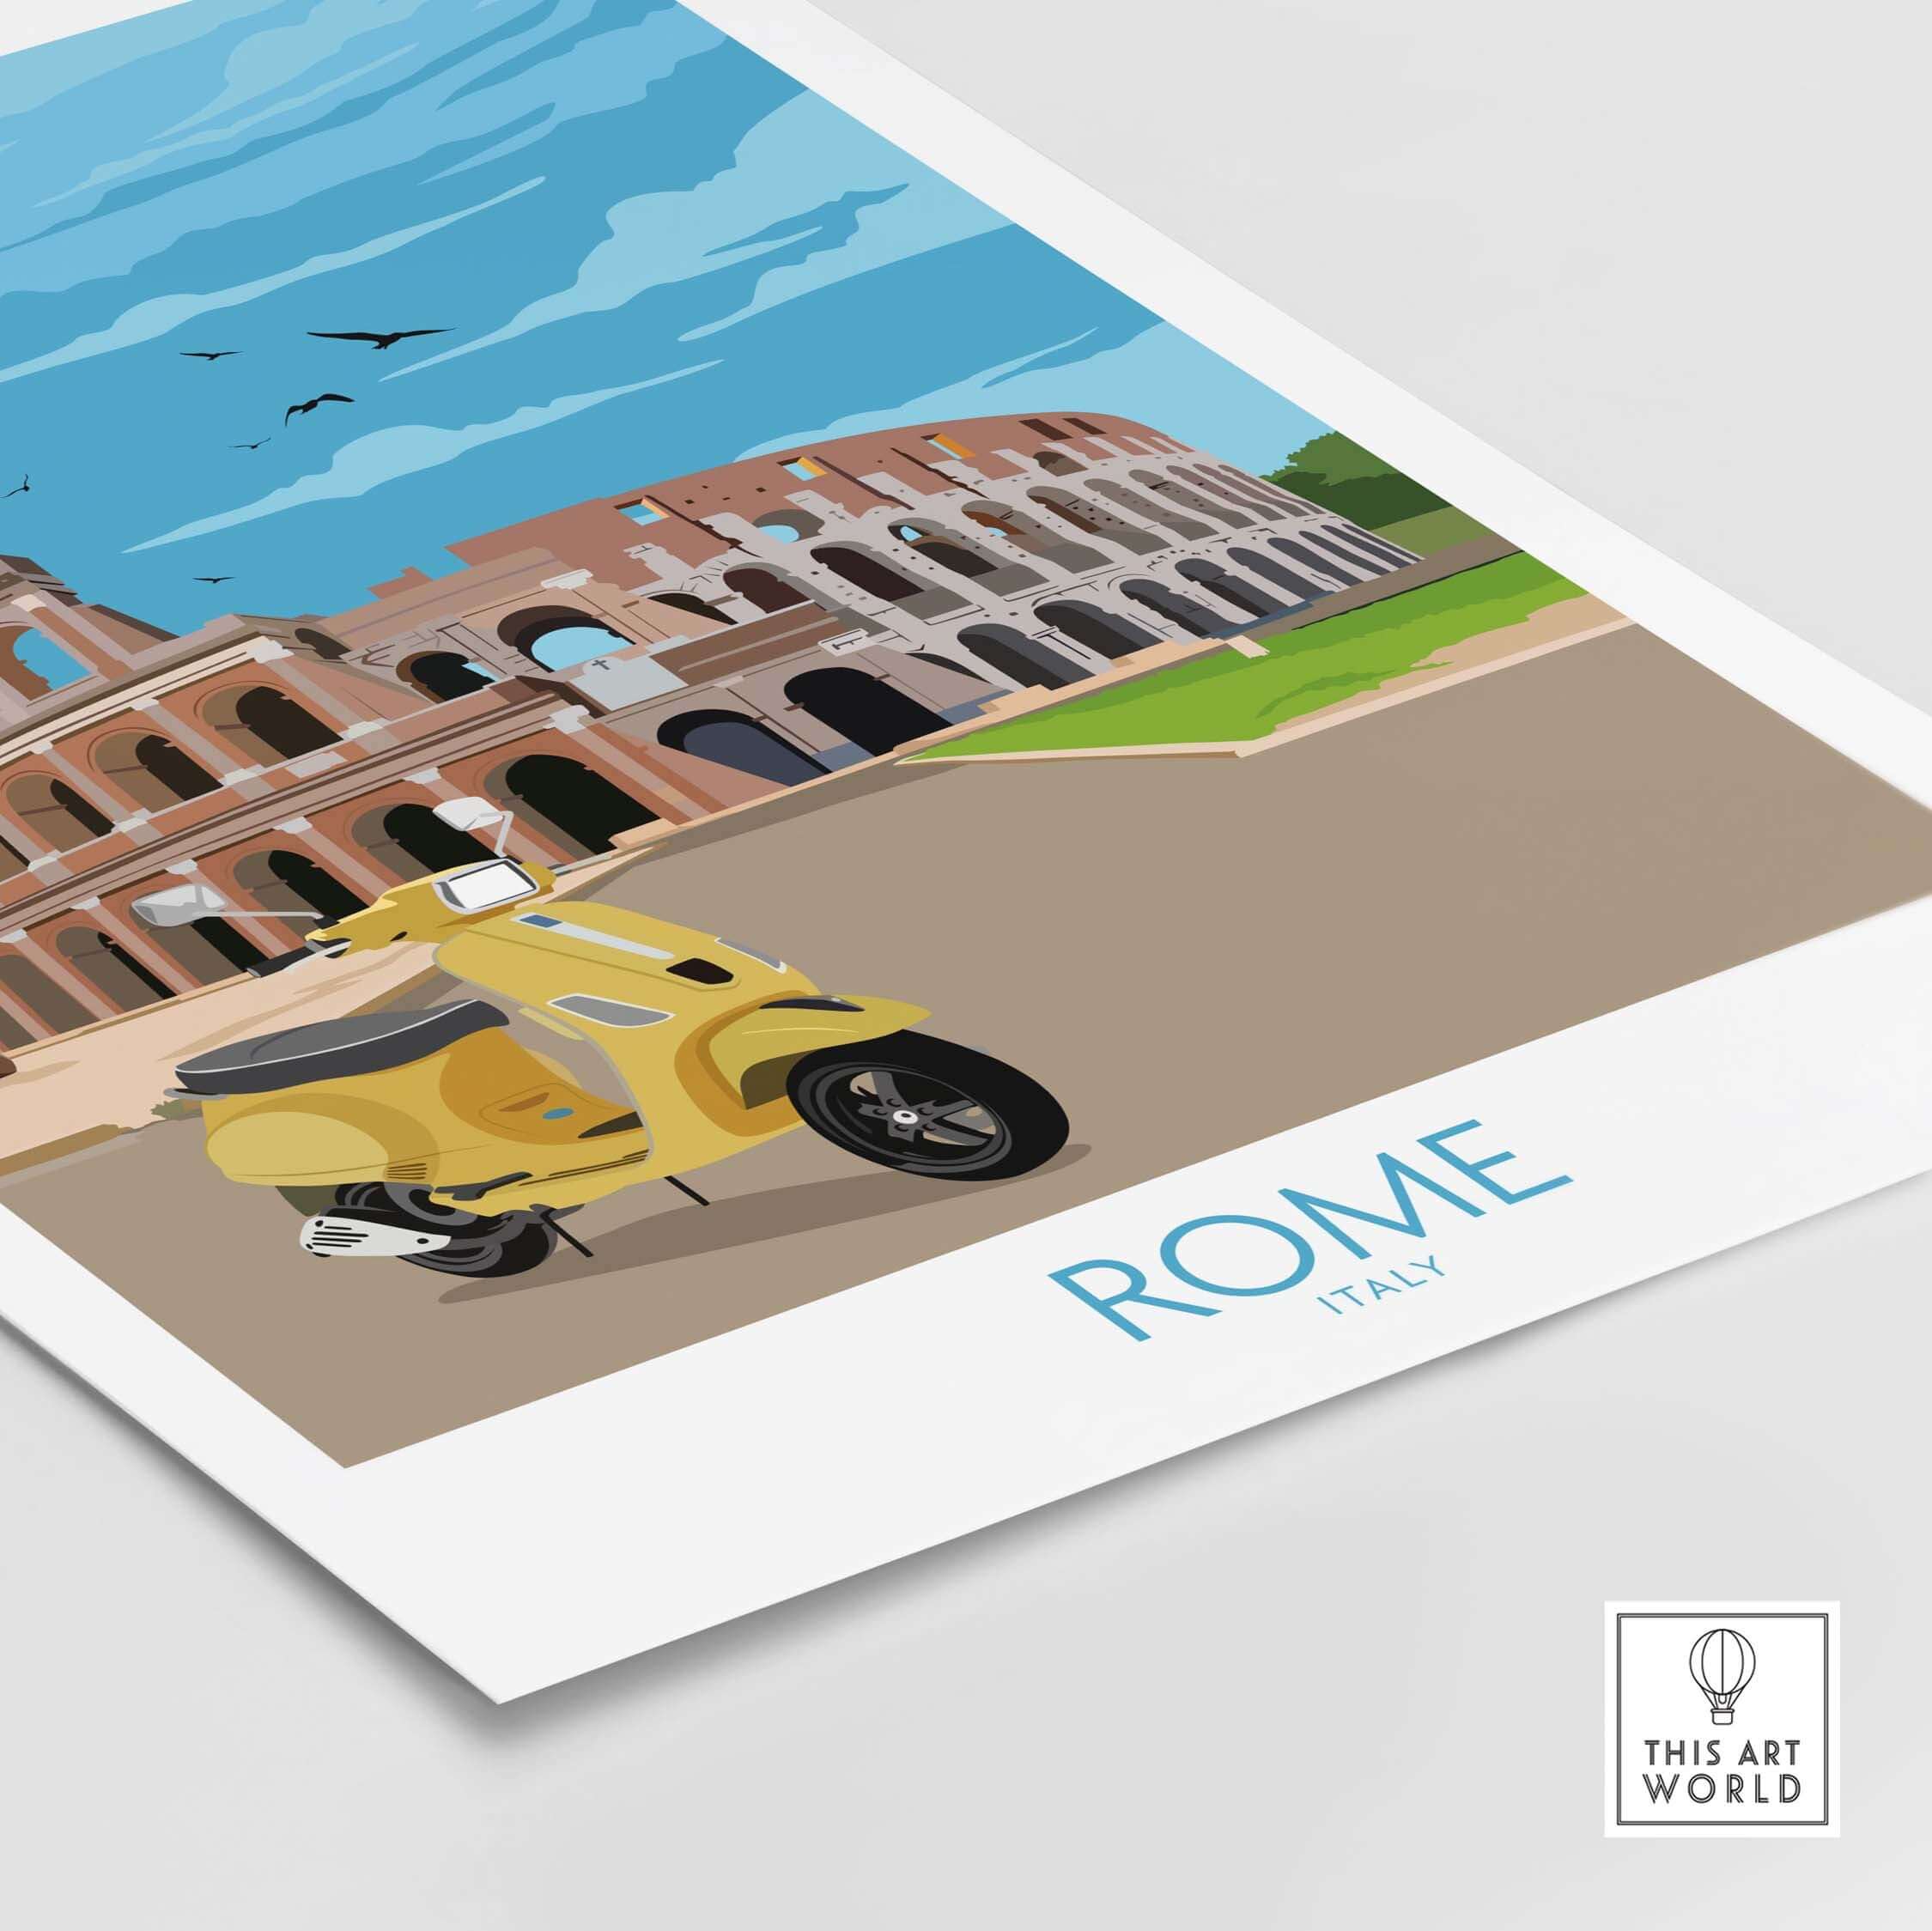 rome travel poster print